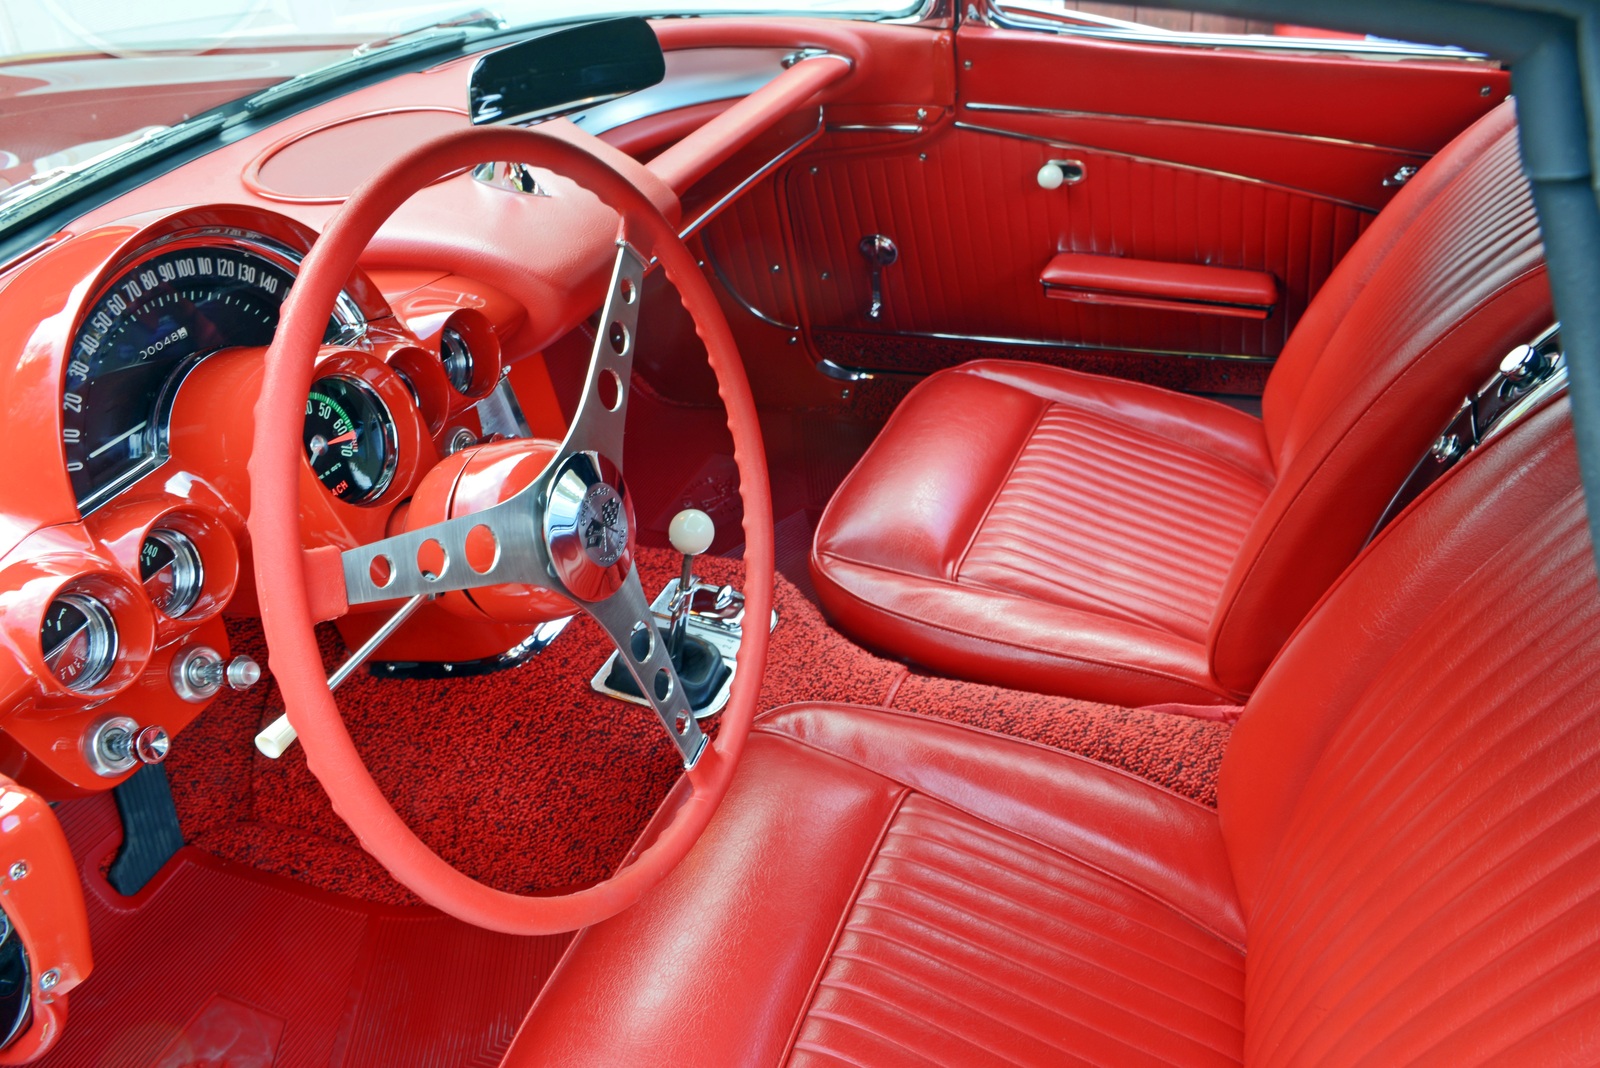 1962 Chevrolet Corvette - Auto, Photo, Chevrolet, Chevrolet corvette, Retro car, Automotive classic, Longpost